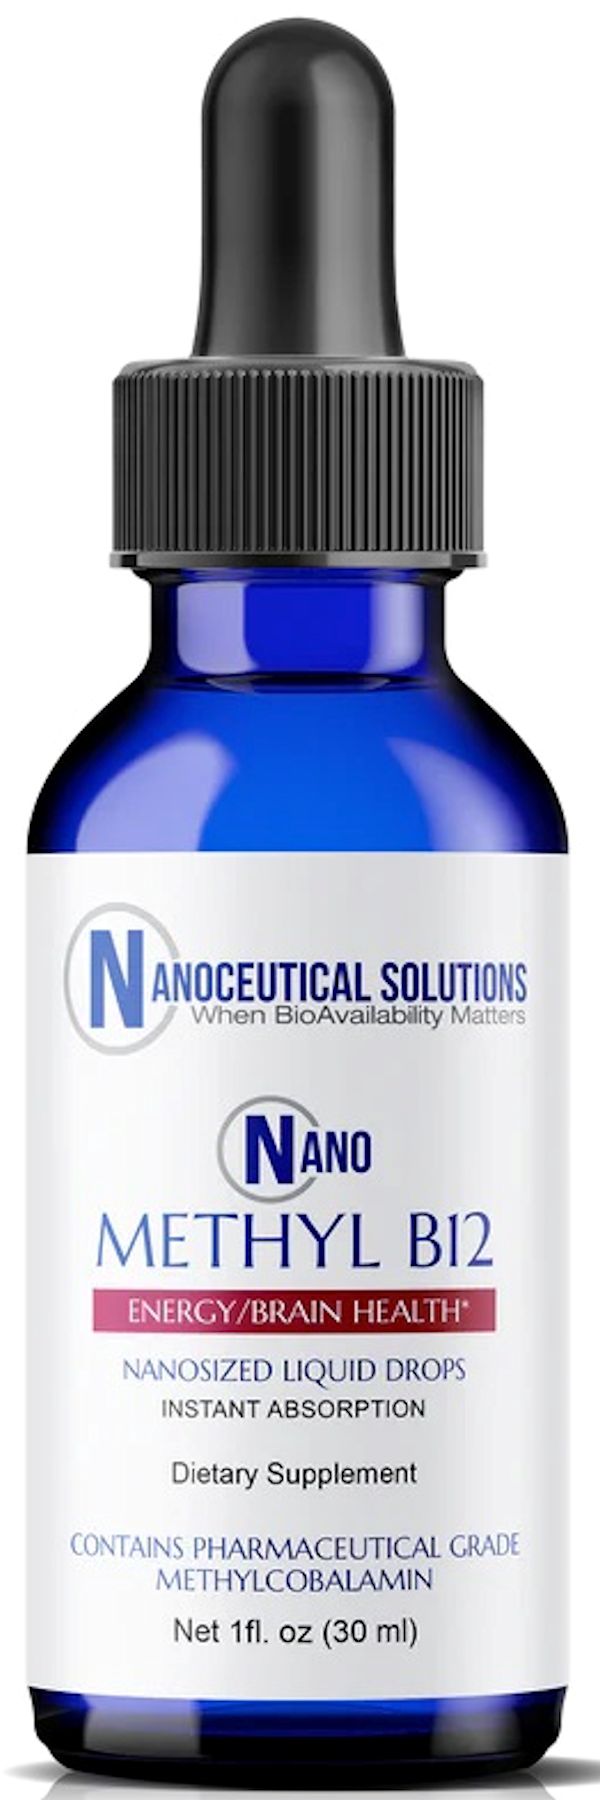 Nanoceutical Solutions Nano Methyl B12 sublingual Instant absorption|Lowcostvitamin.com